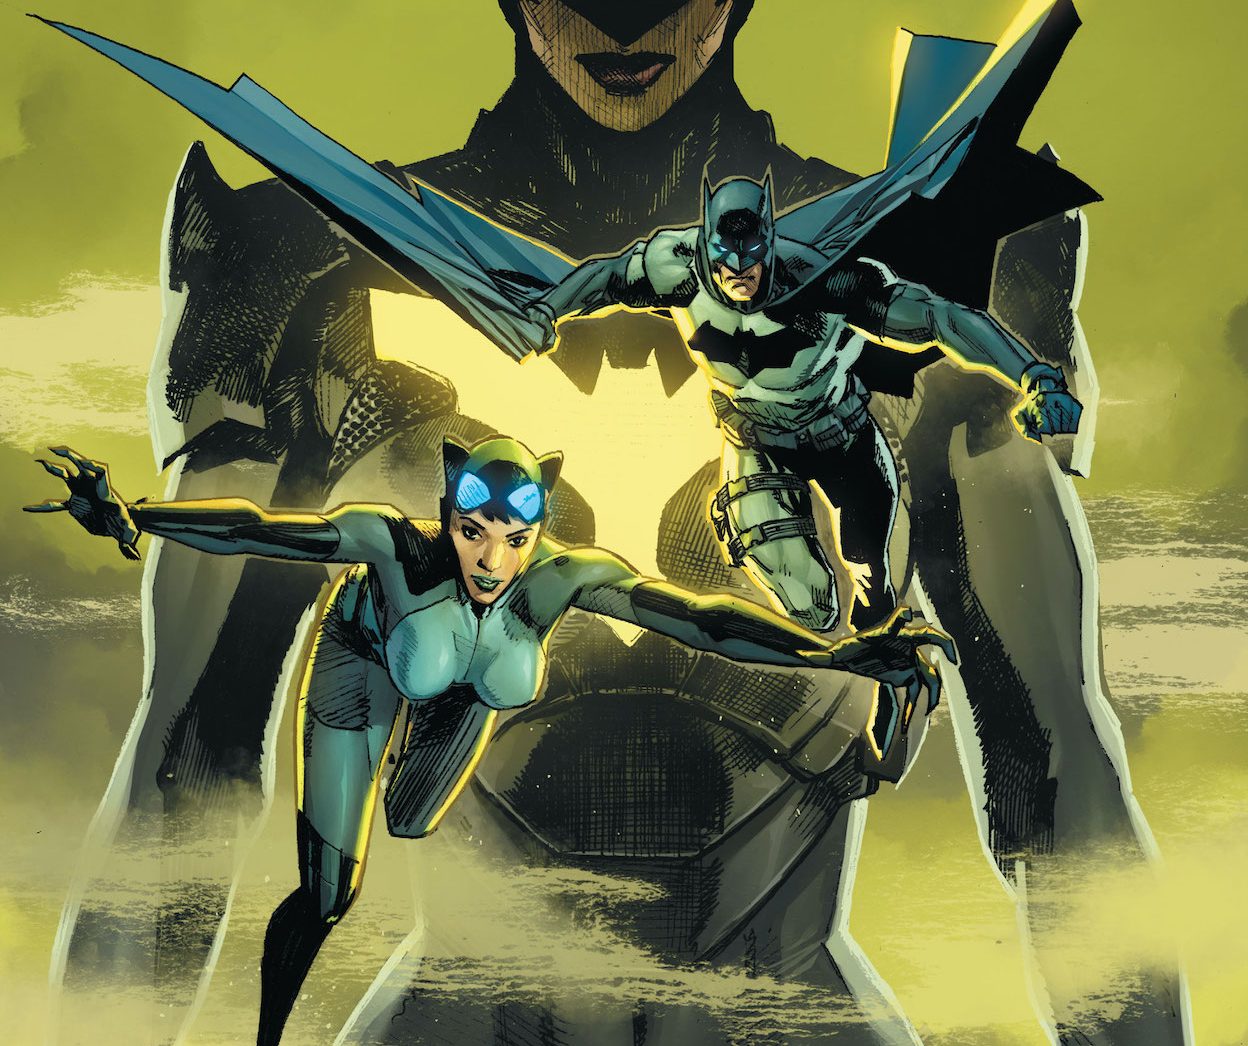 'Batman/Catwoman' #4 pushes Phantasm to center stage